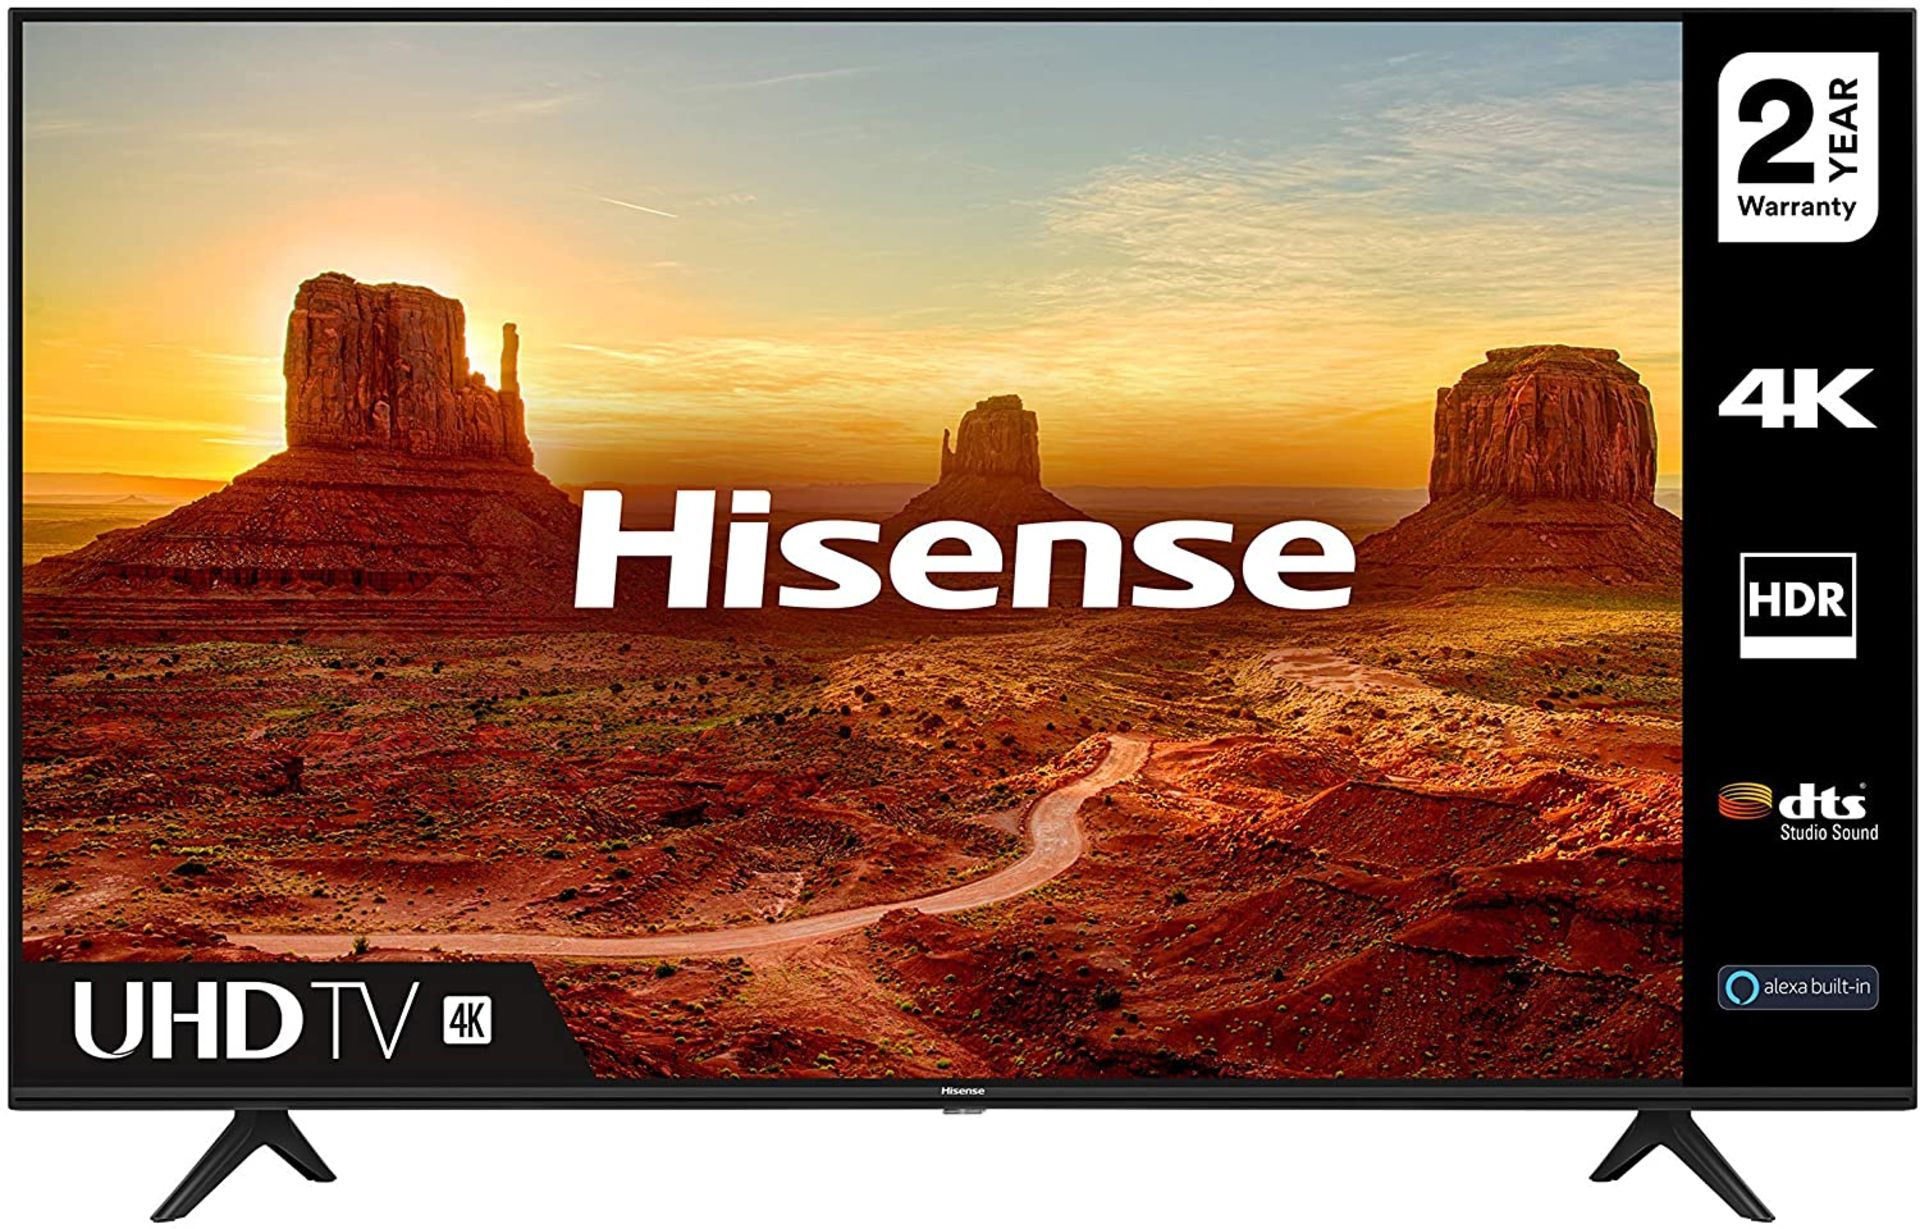 Hisense 43" 4K Ultra HD Smart TV RPP £389